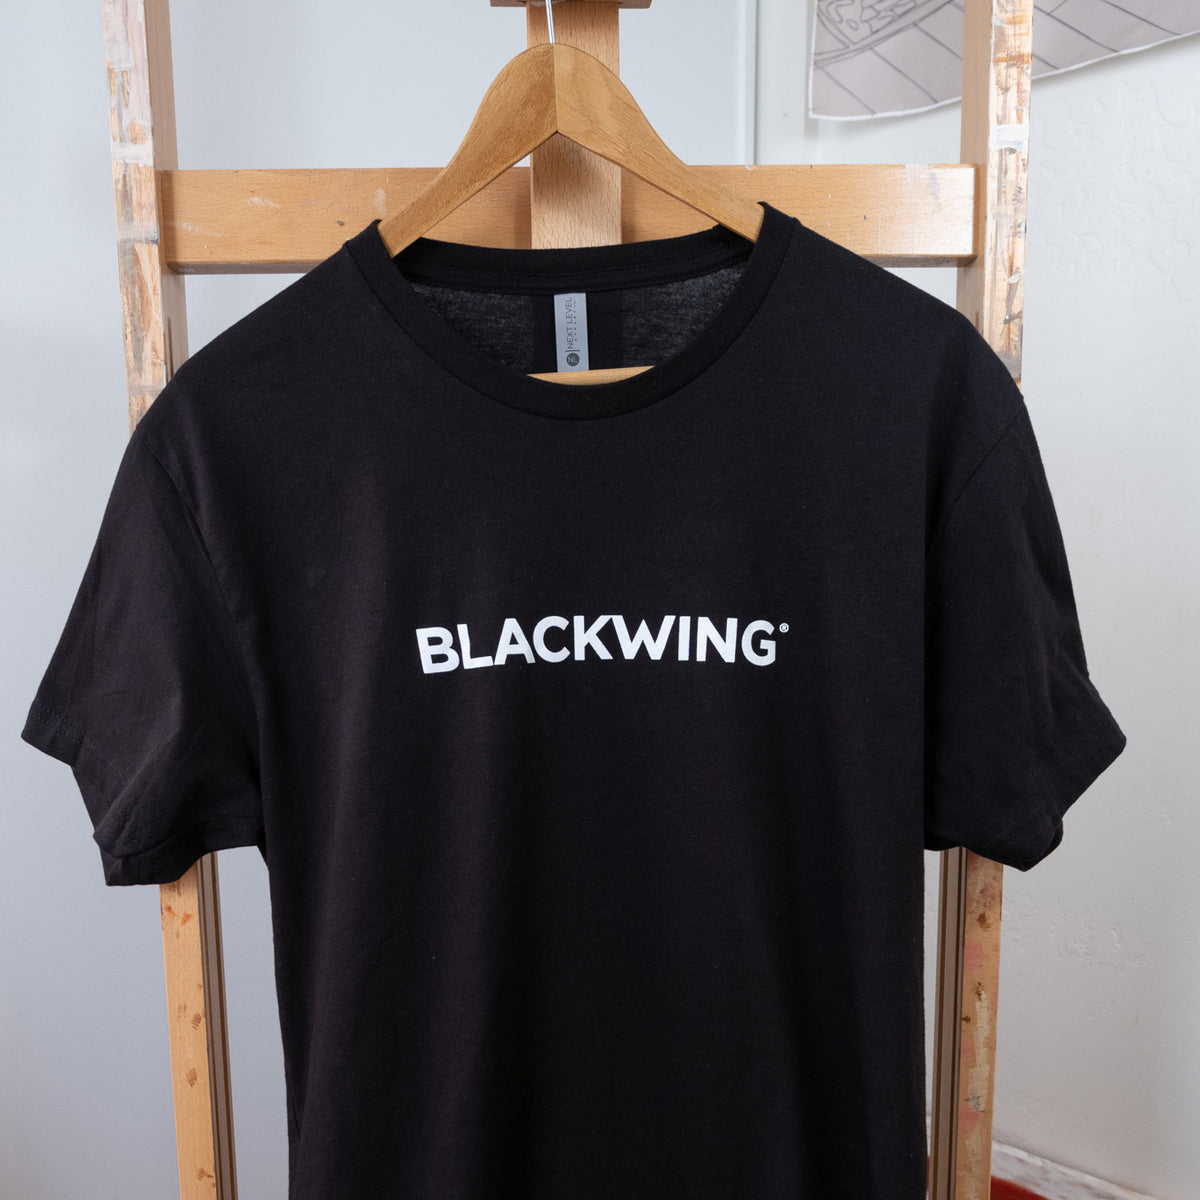 A Blackwing Logo Shirt hangs on a rack.